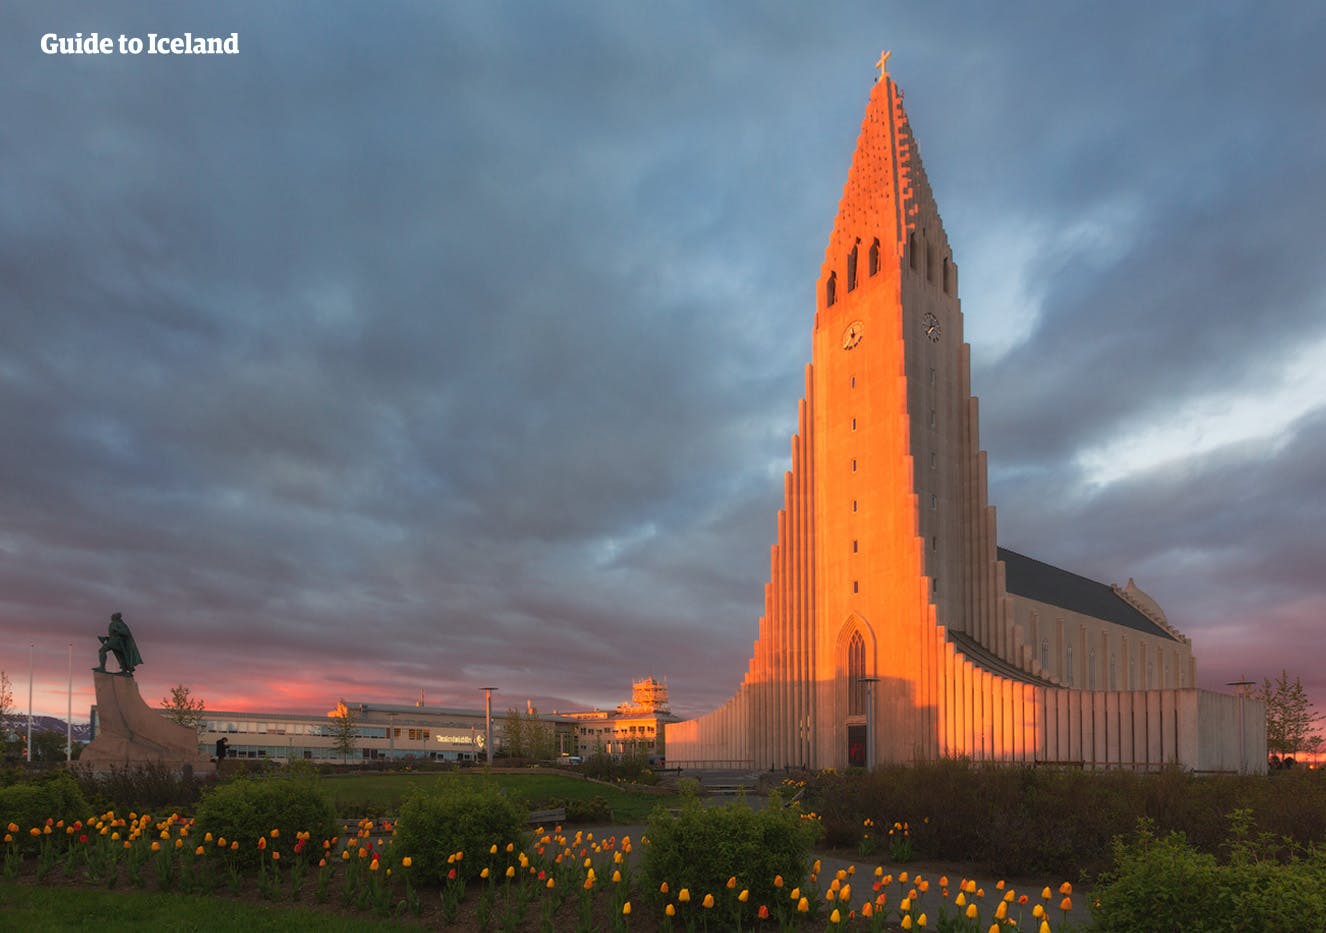 Reykjavík's landmark building, Hallgrímskirkja church, bathed in the rays of the midnight sun.